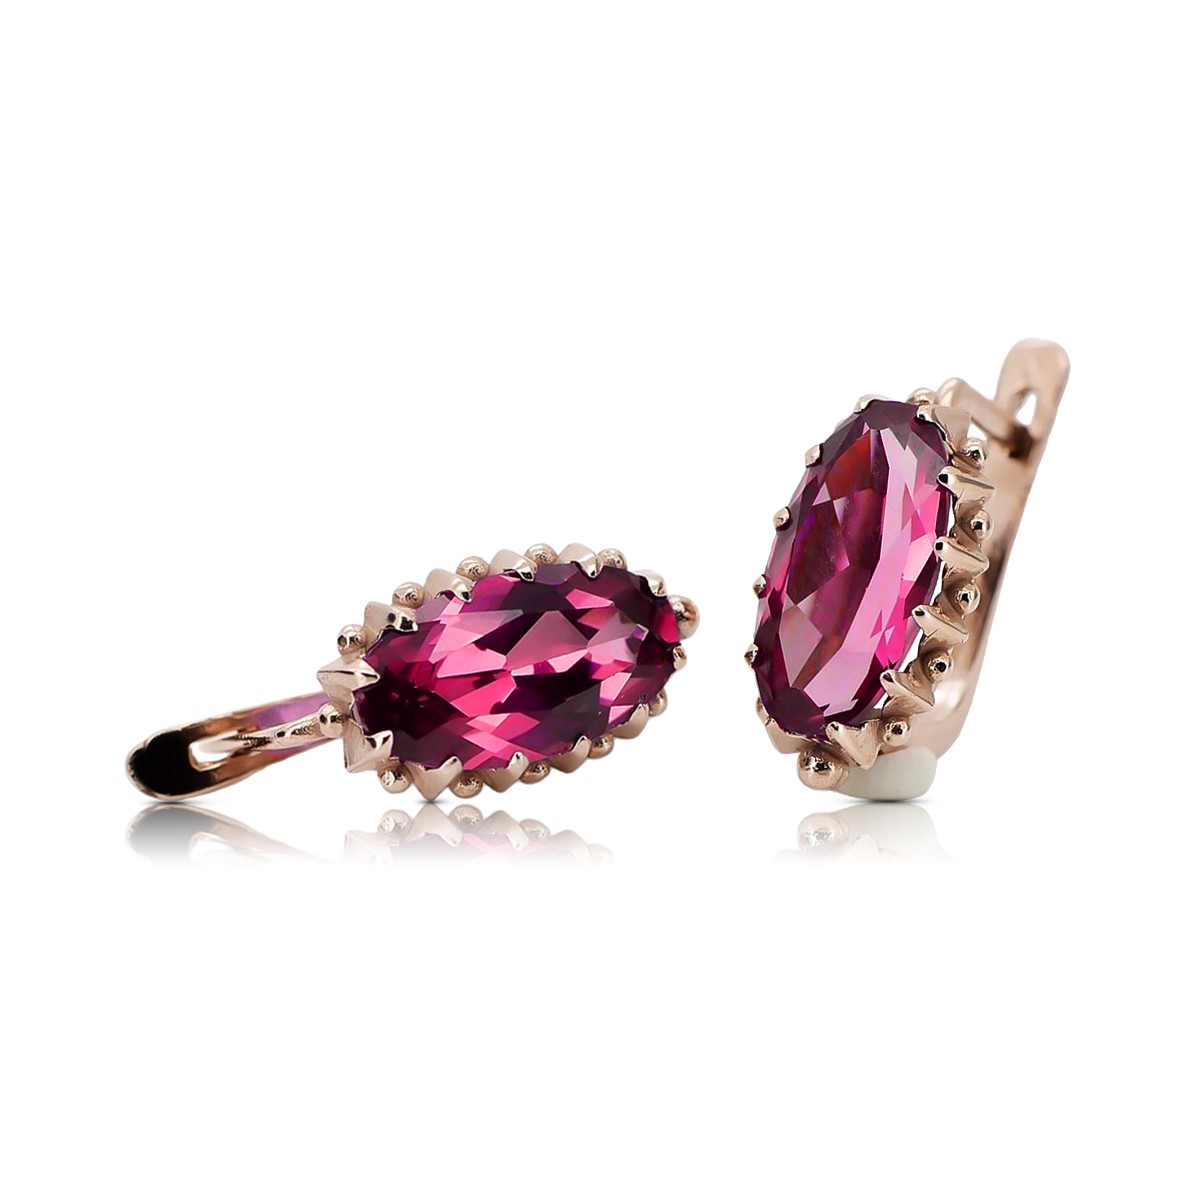 Vintage-Ohrringe aus rosévergoldetem 925er-Rubin-Silber vec174rp